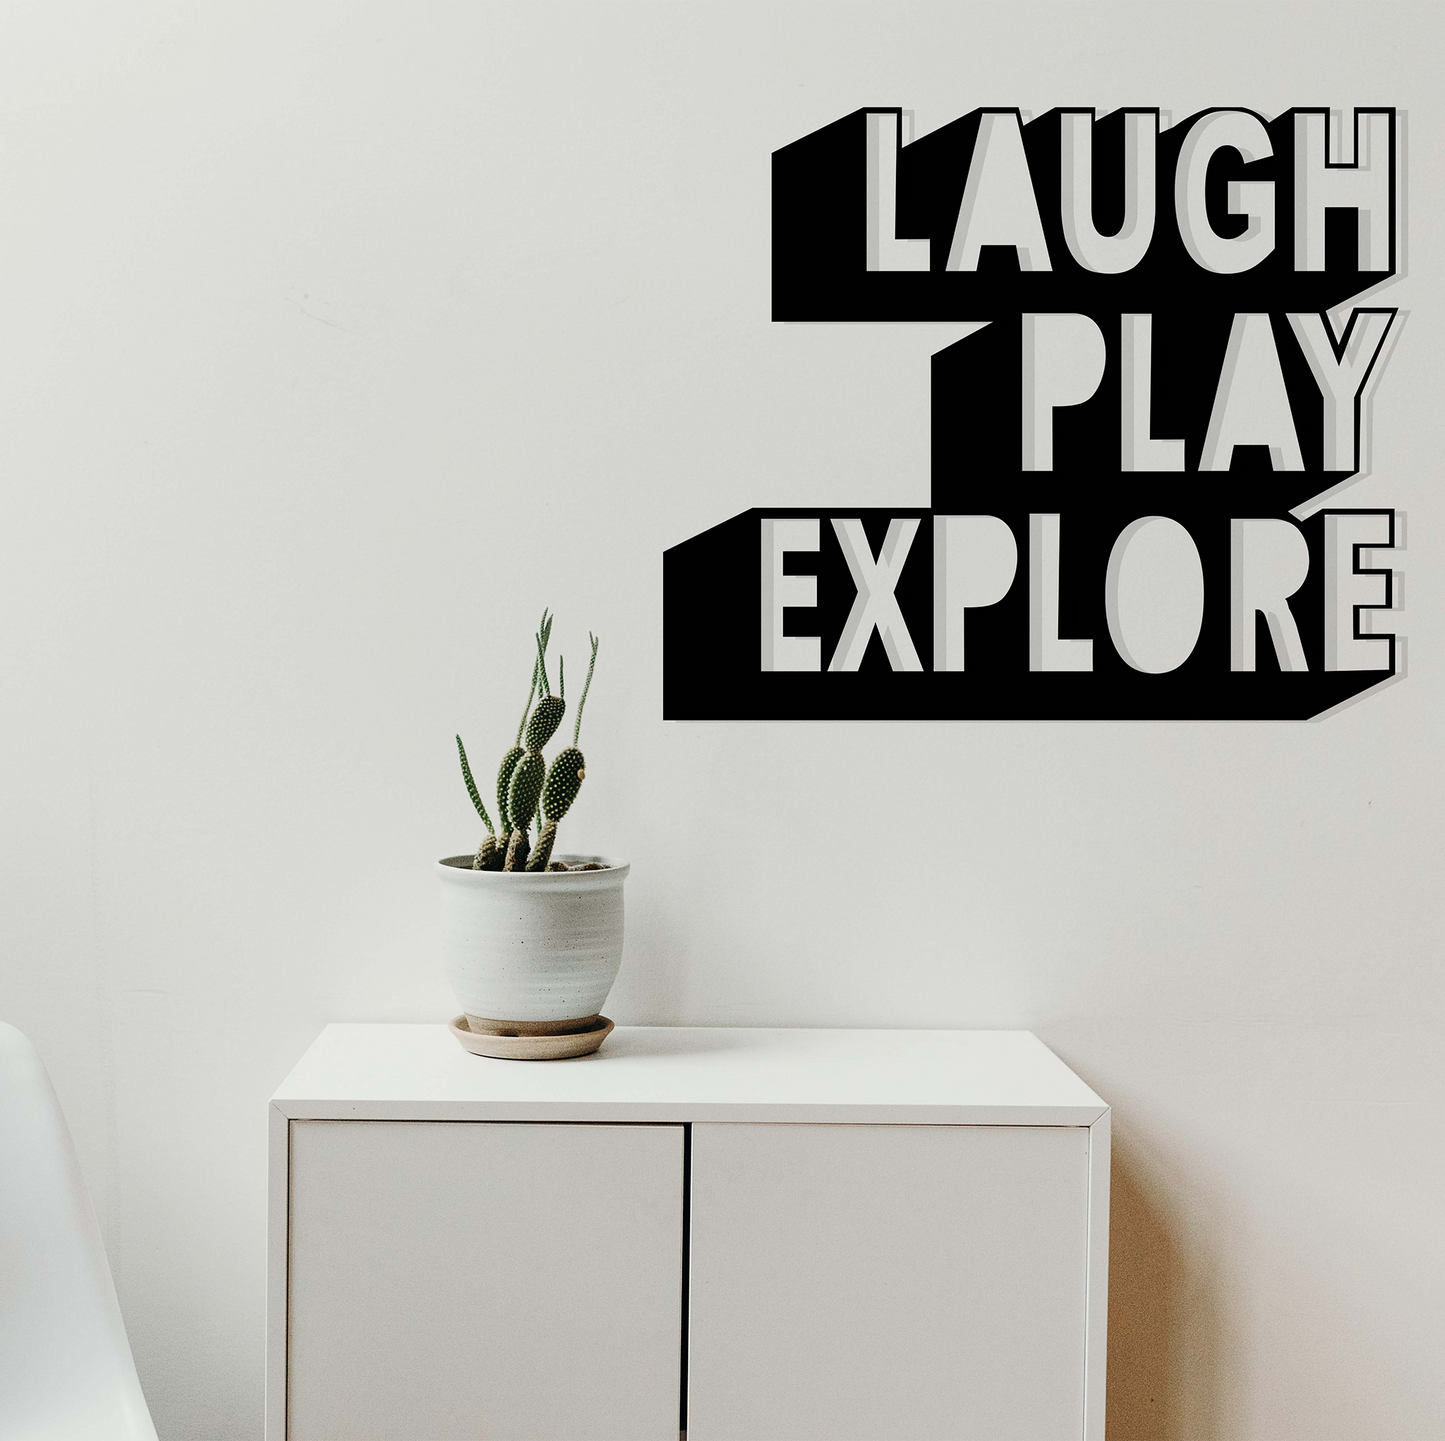 LAUGH PLAY EXPLORE, Μεταλλικό διακοσμητικό τοίχου